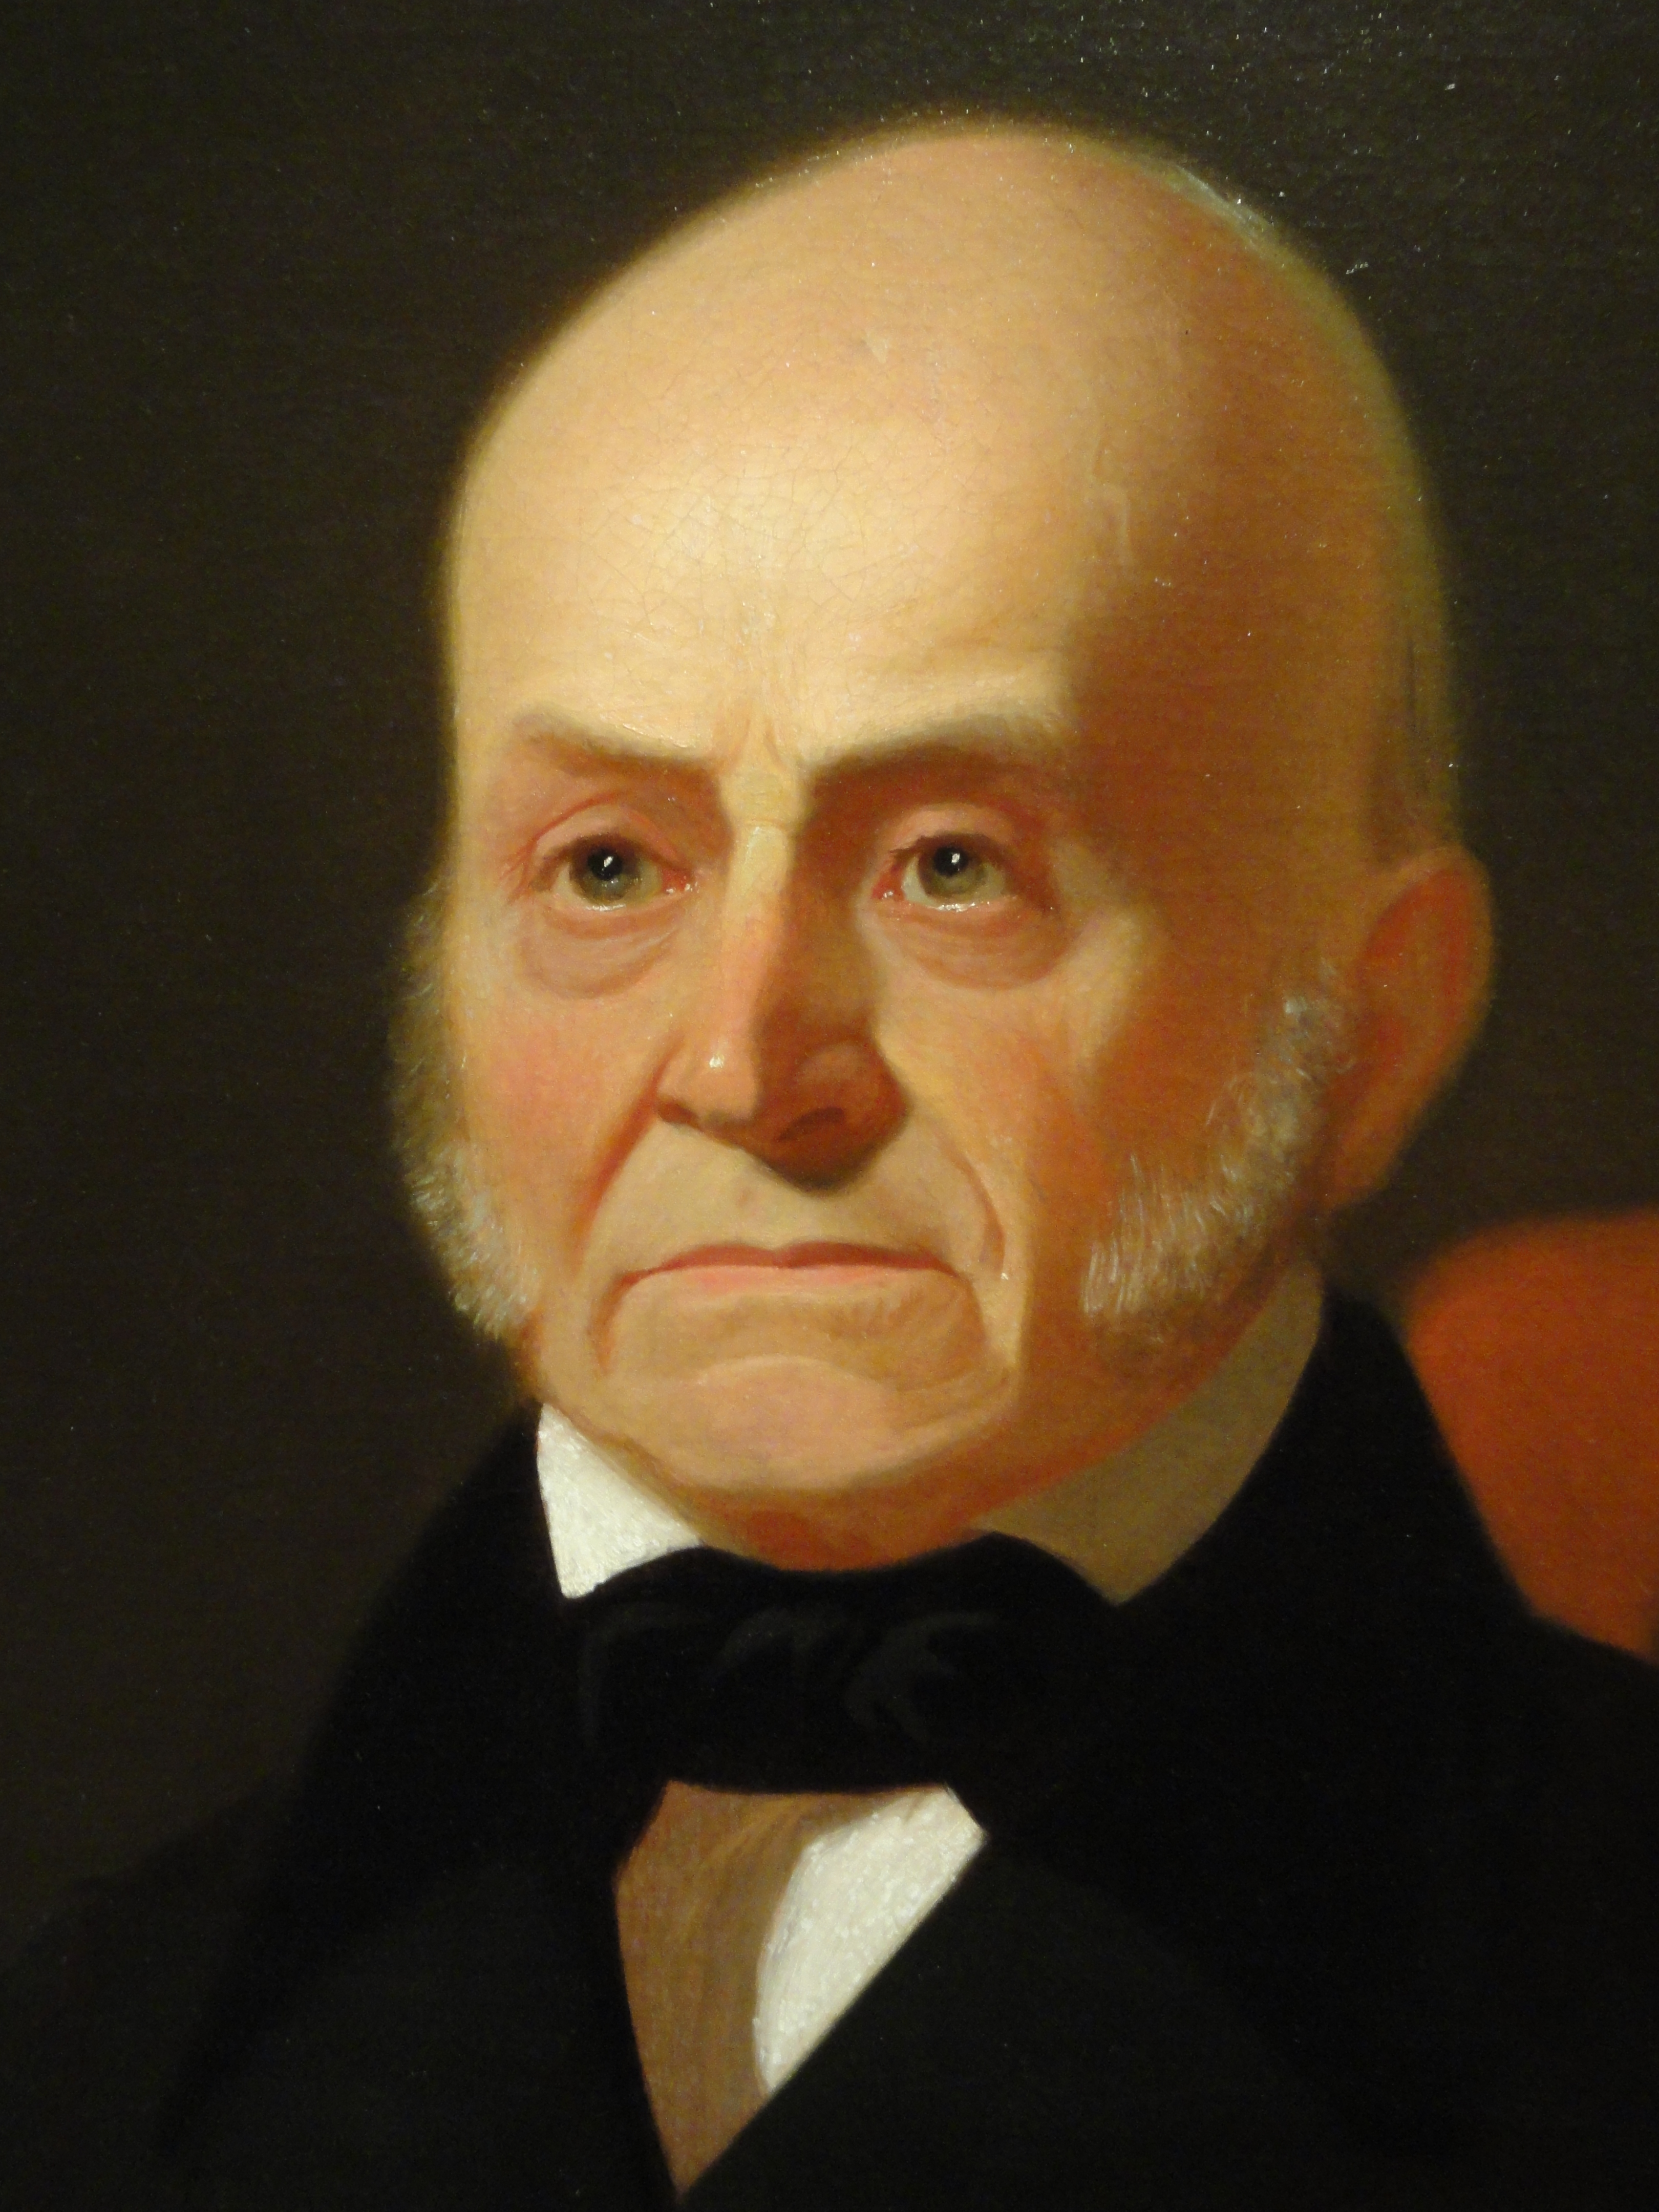 John Adams - President of the United States